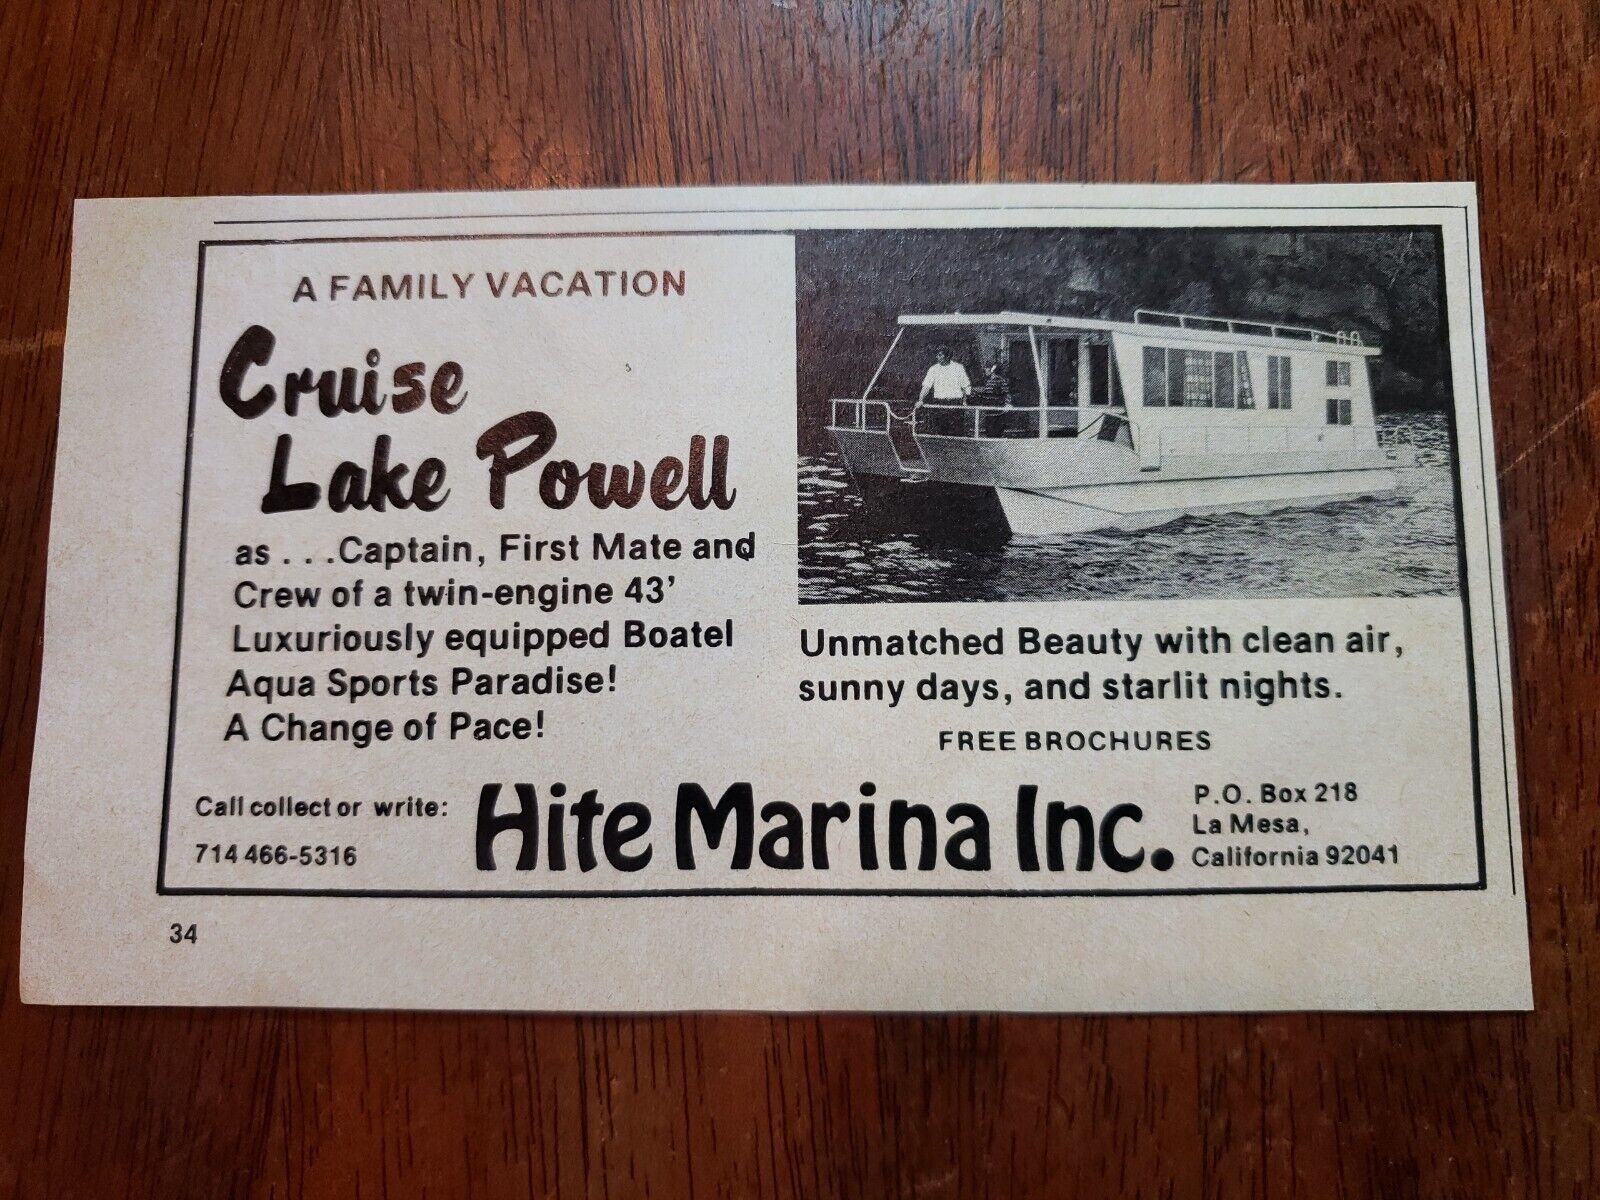 Hite Marina Advertising 1976. Criuse Lake Powell. House boat 